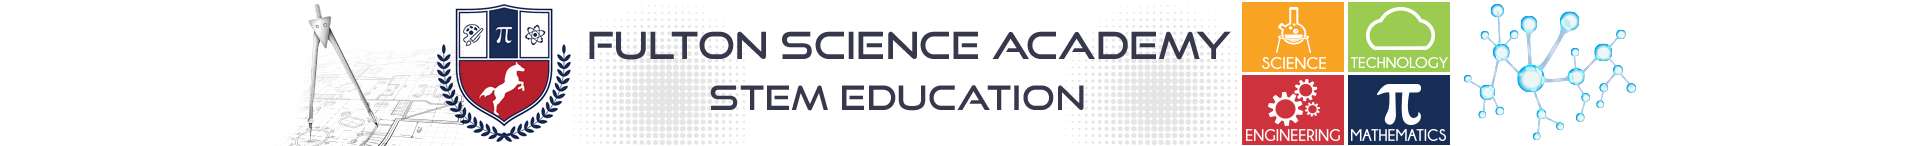 Fulton Science Academy STEM Education Logo